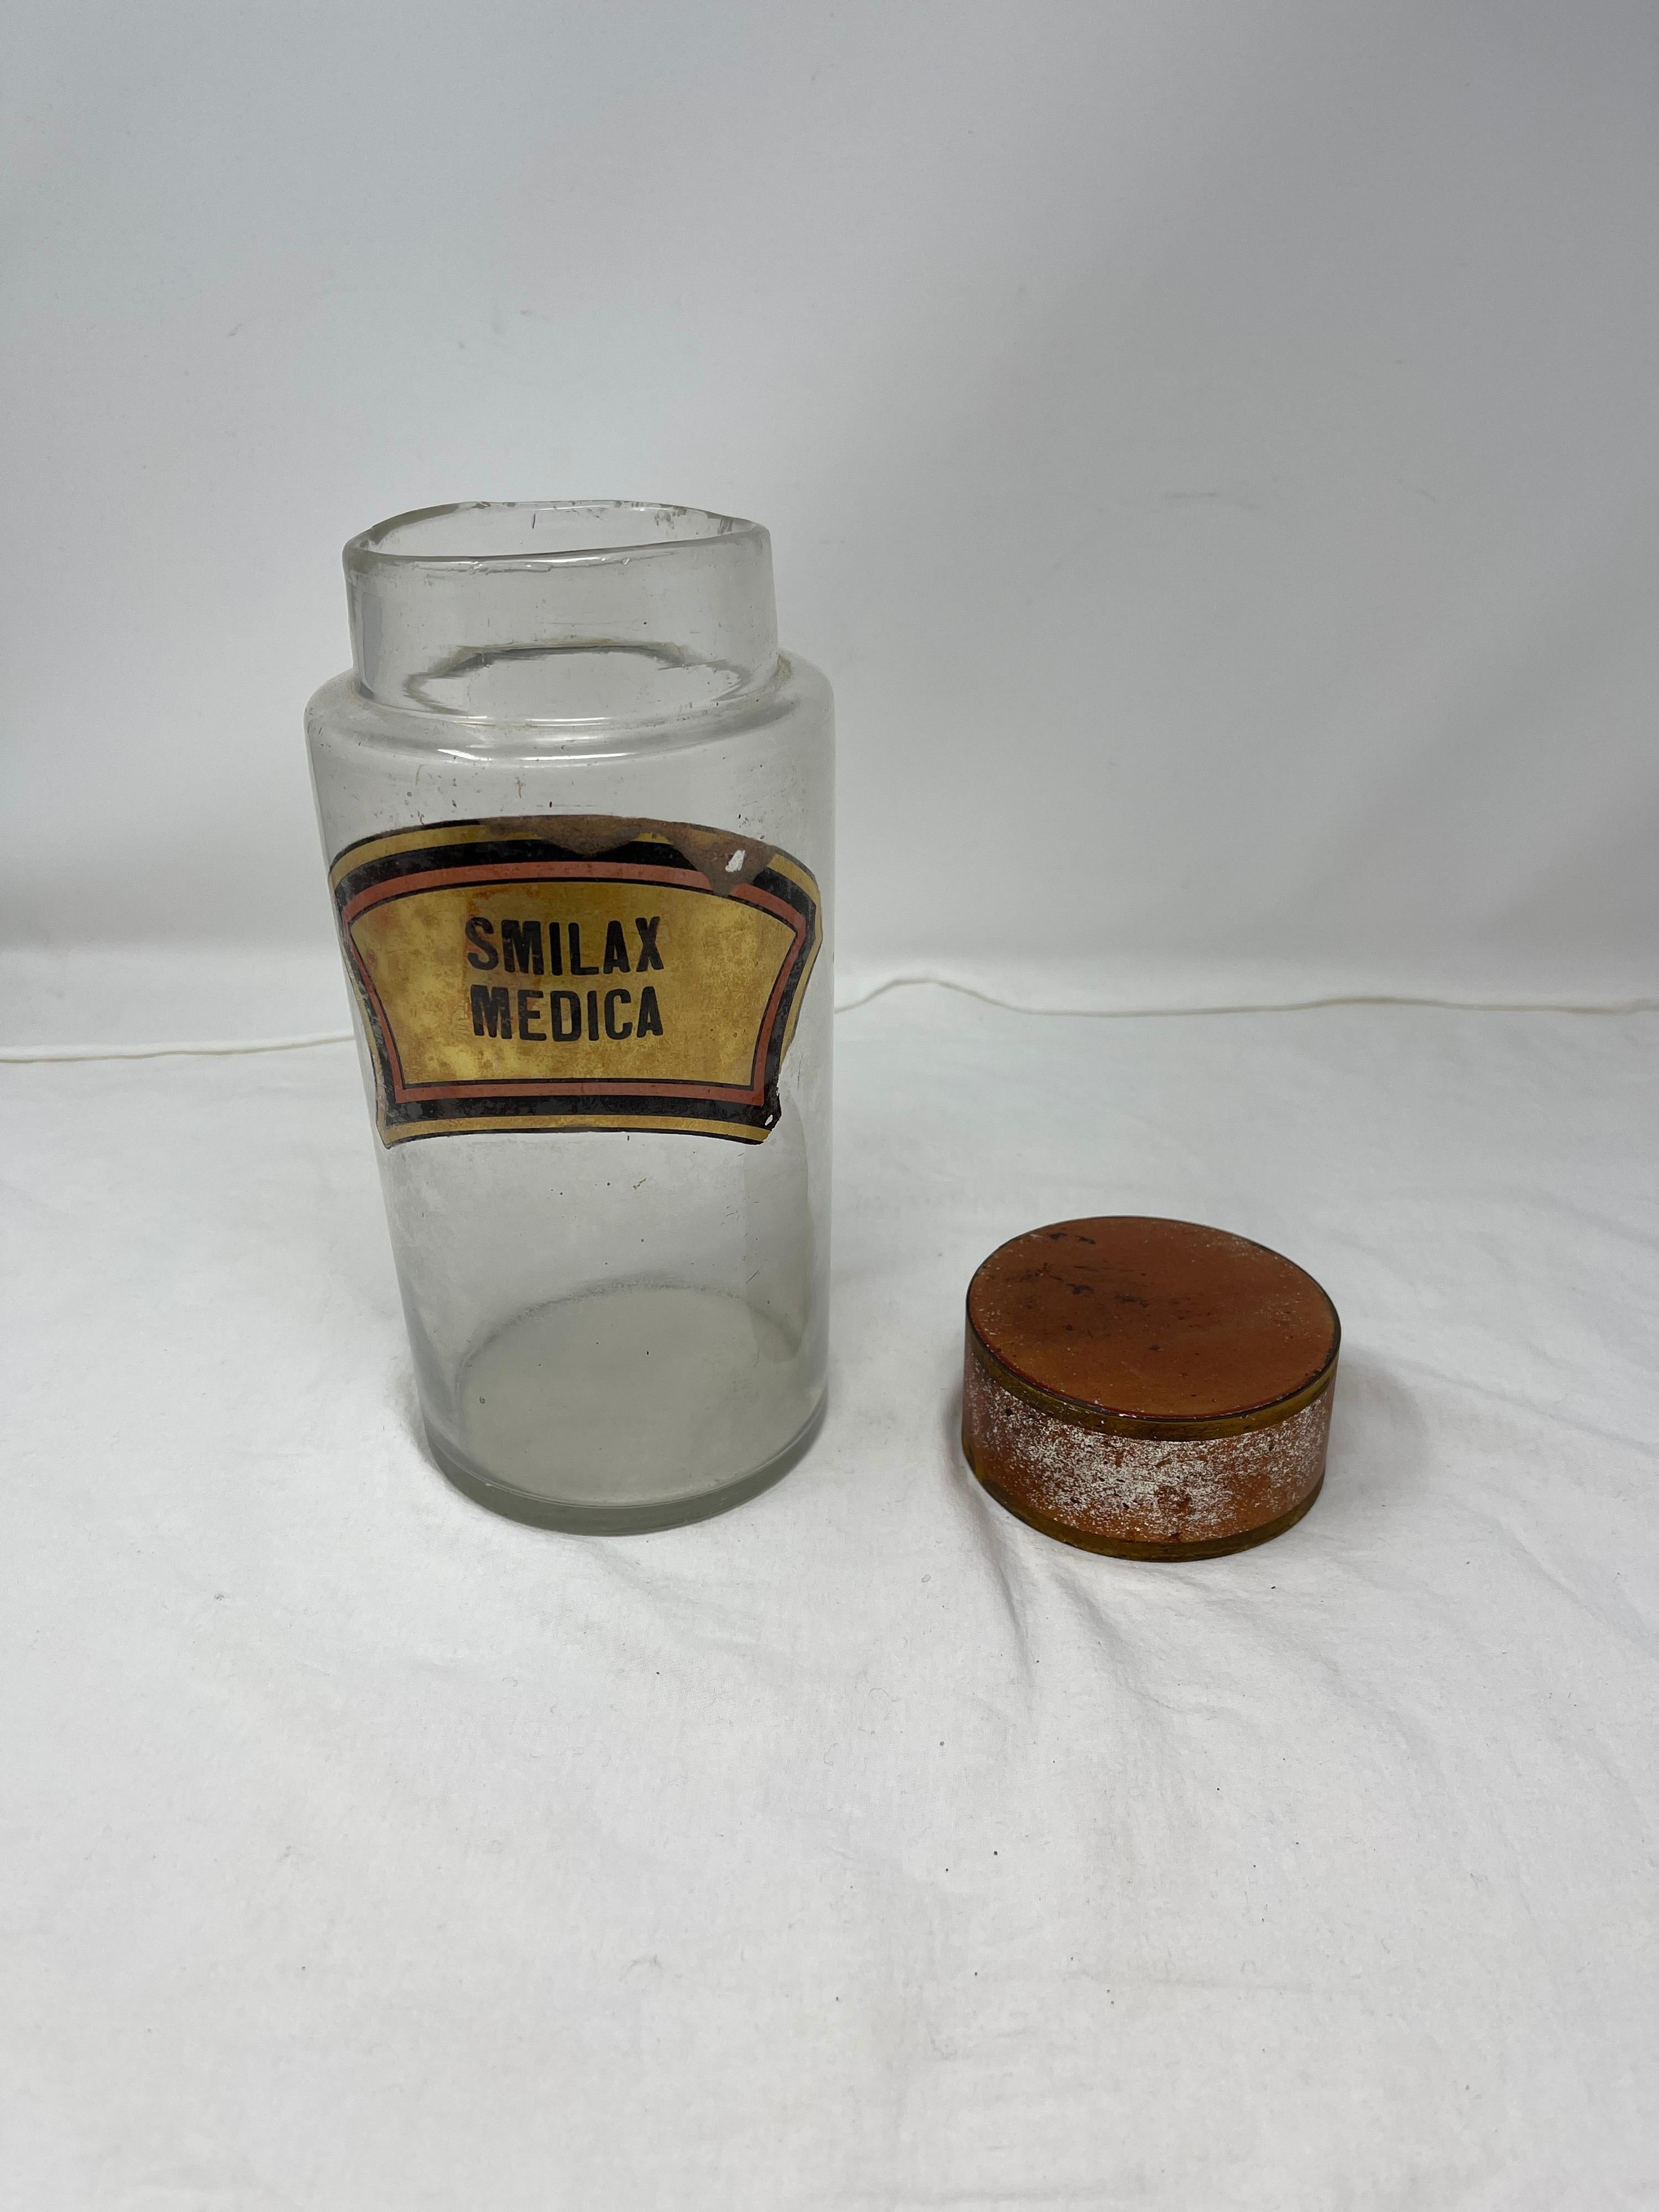 Antique Pharmacy Jar “Smilax Medica” For Sale 2